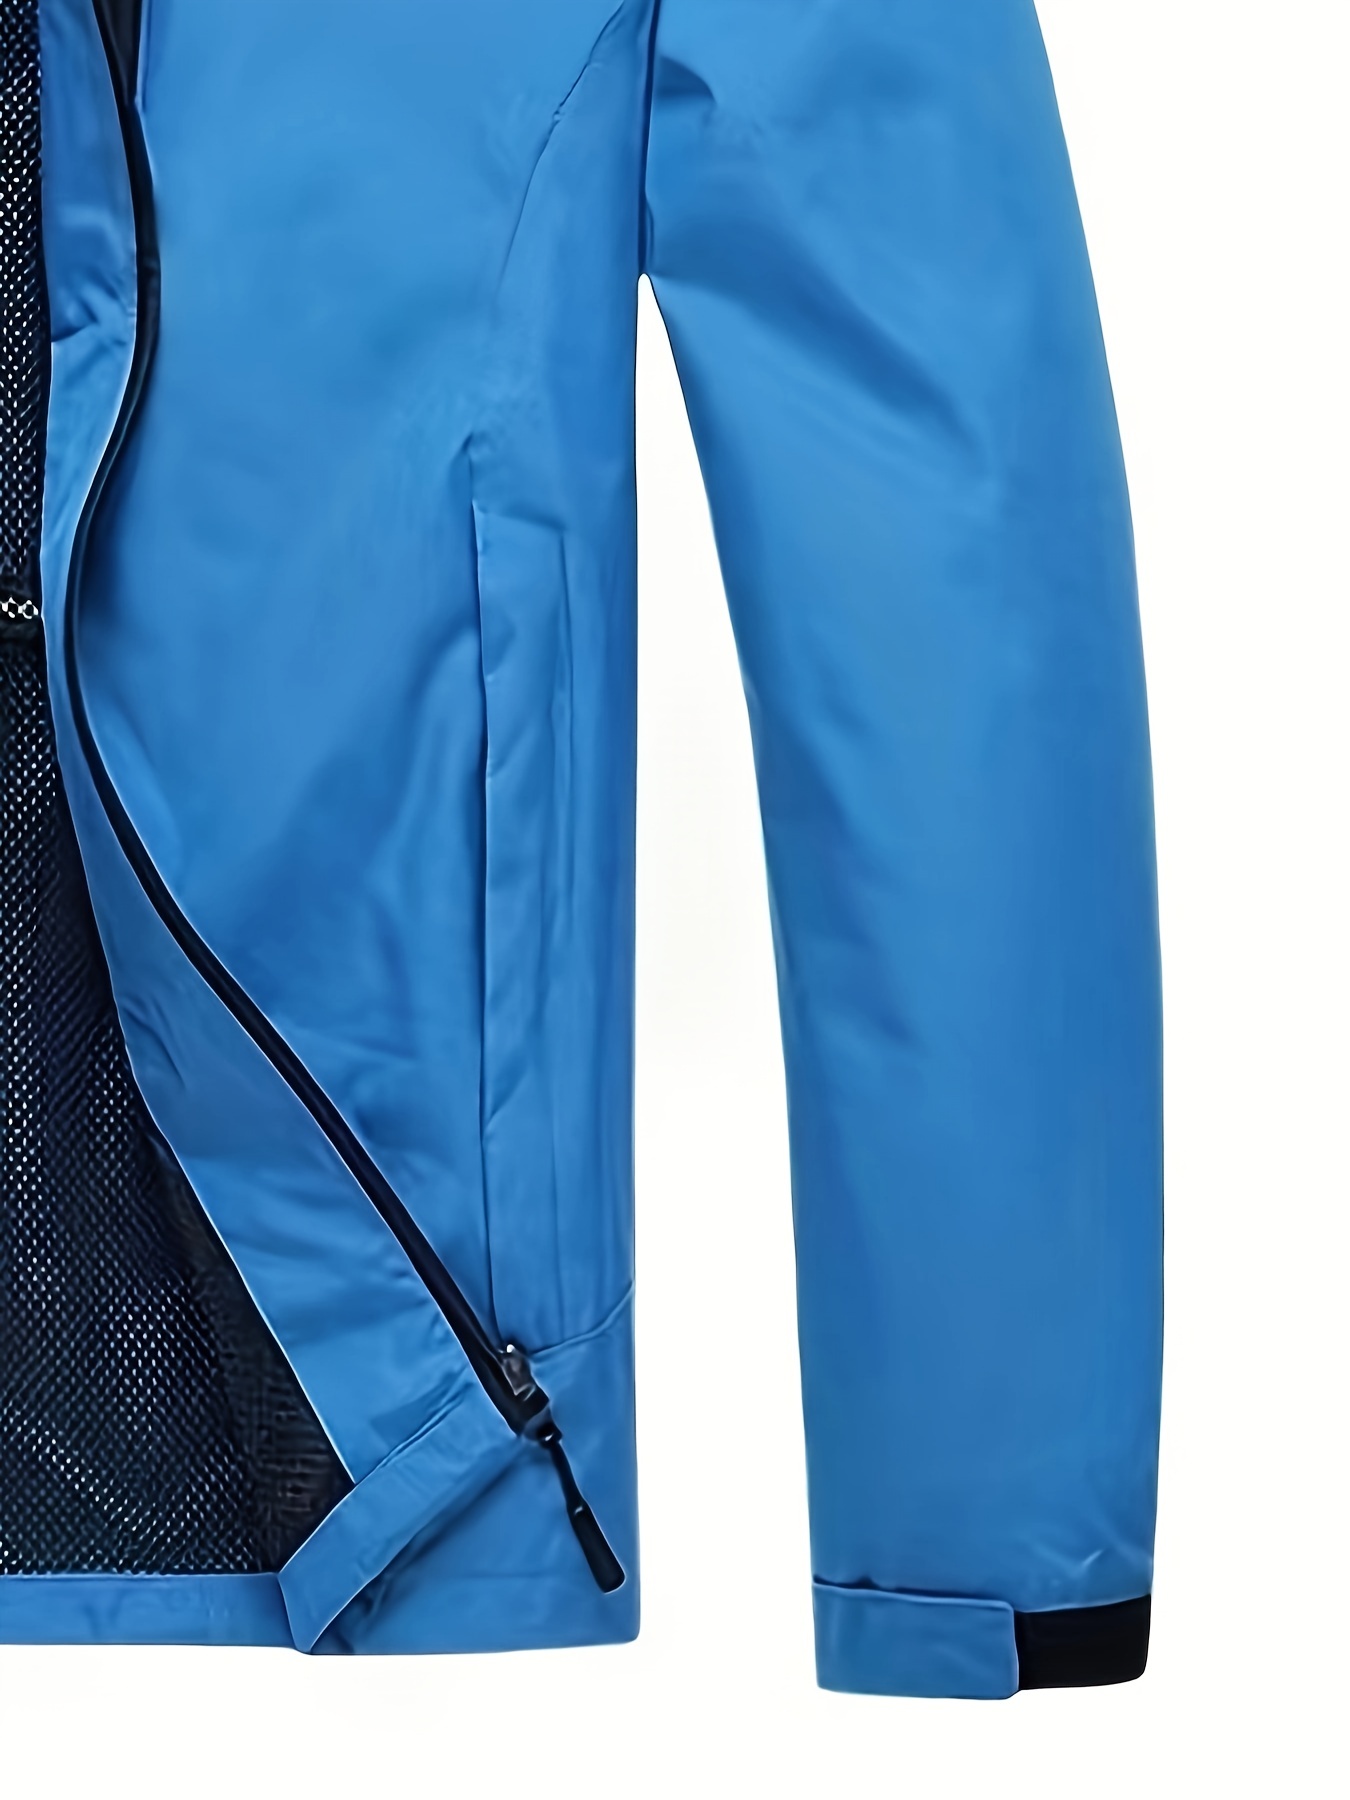 mens waterproof rain jacket lightweight raincoat windbreaker with hood for hiking travel outdoor details 17